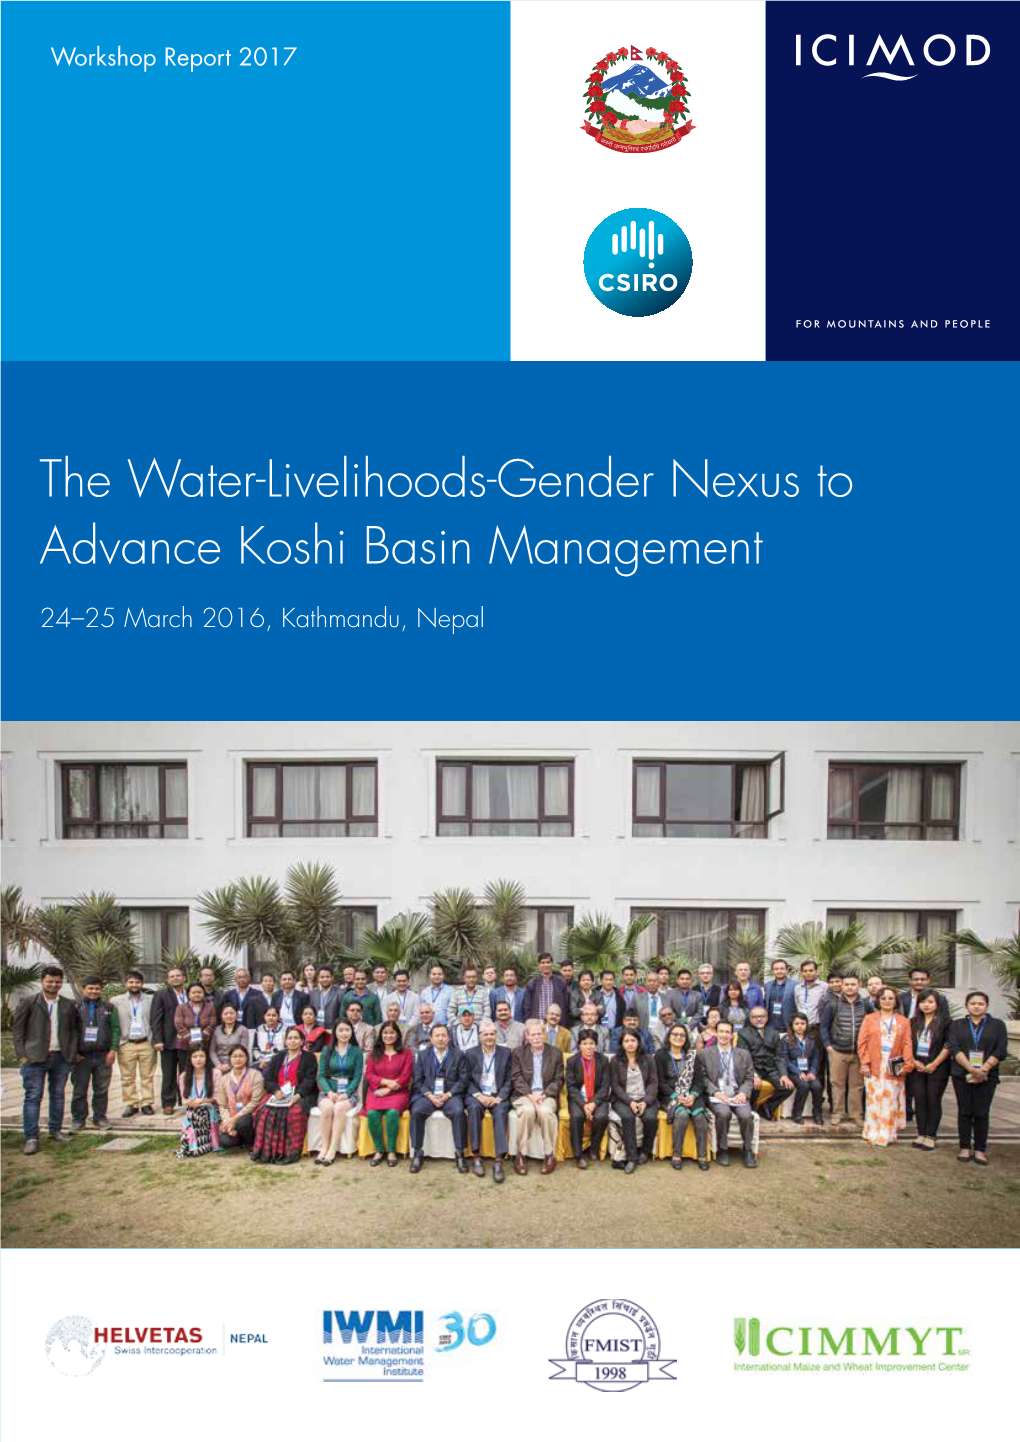 The Water-Livelihoods-Gender Nexus to Advance Koshi Basin Management